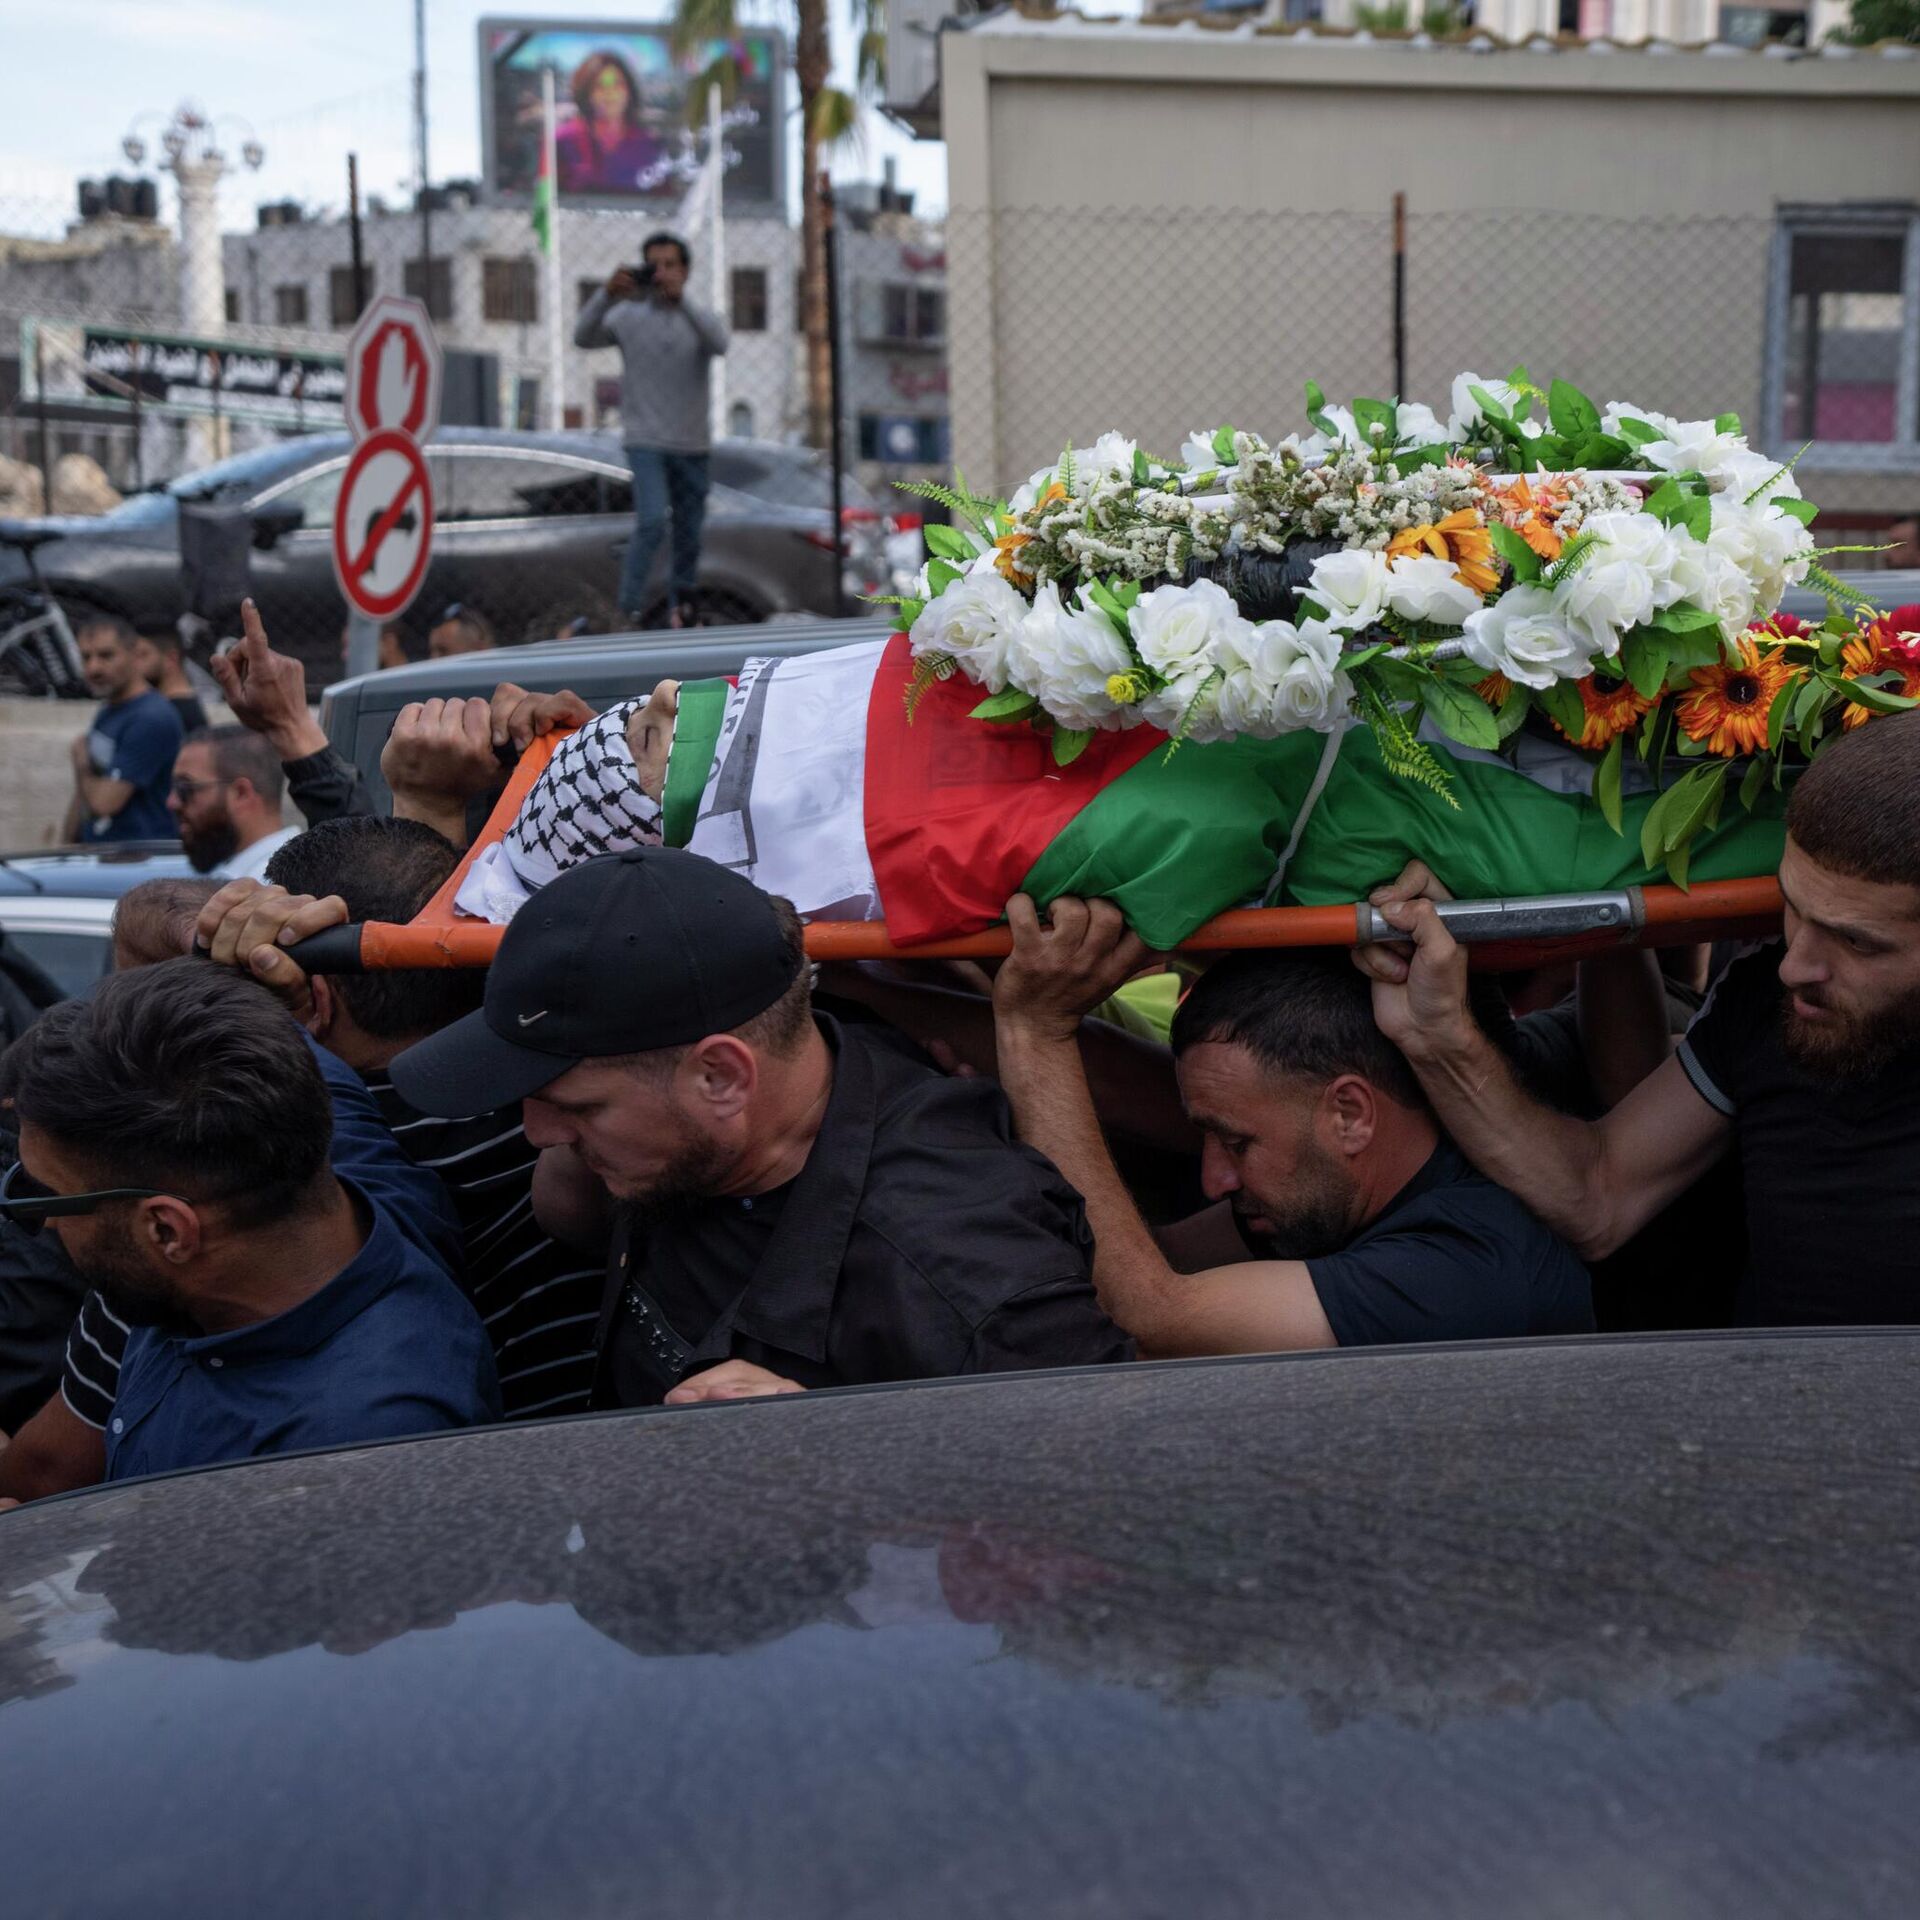 Al Jazeera Reporter Shireen Abu Akleh Killed by Israeli Soldiers in West Bank, Network Says - 11.05.2022, Sputnik International